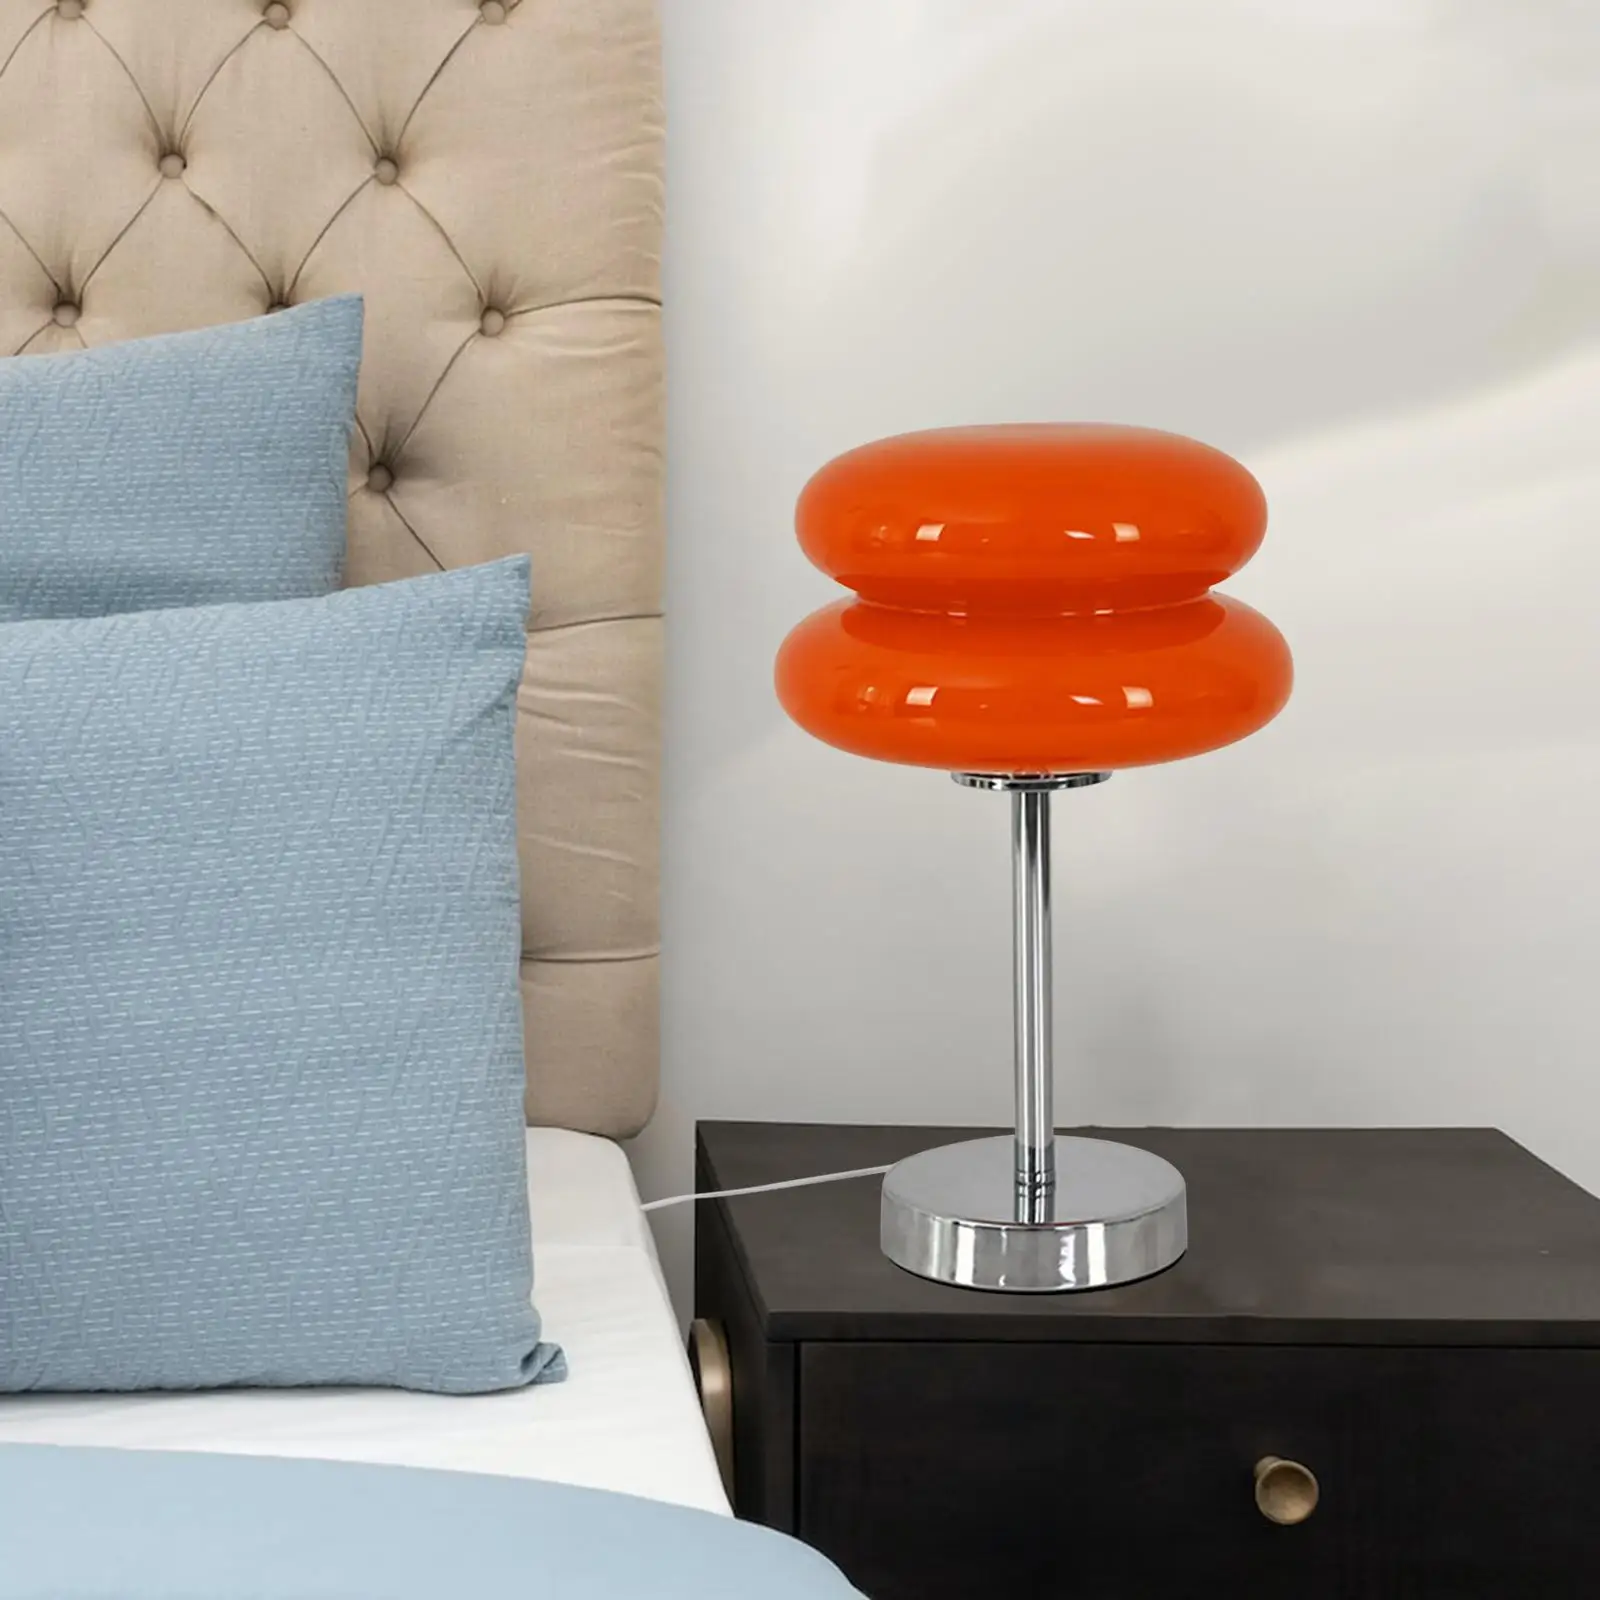 Egg Tart Mushroom Table Lamp 3 Colors Changing Night Light Study for Bedroom